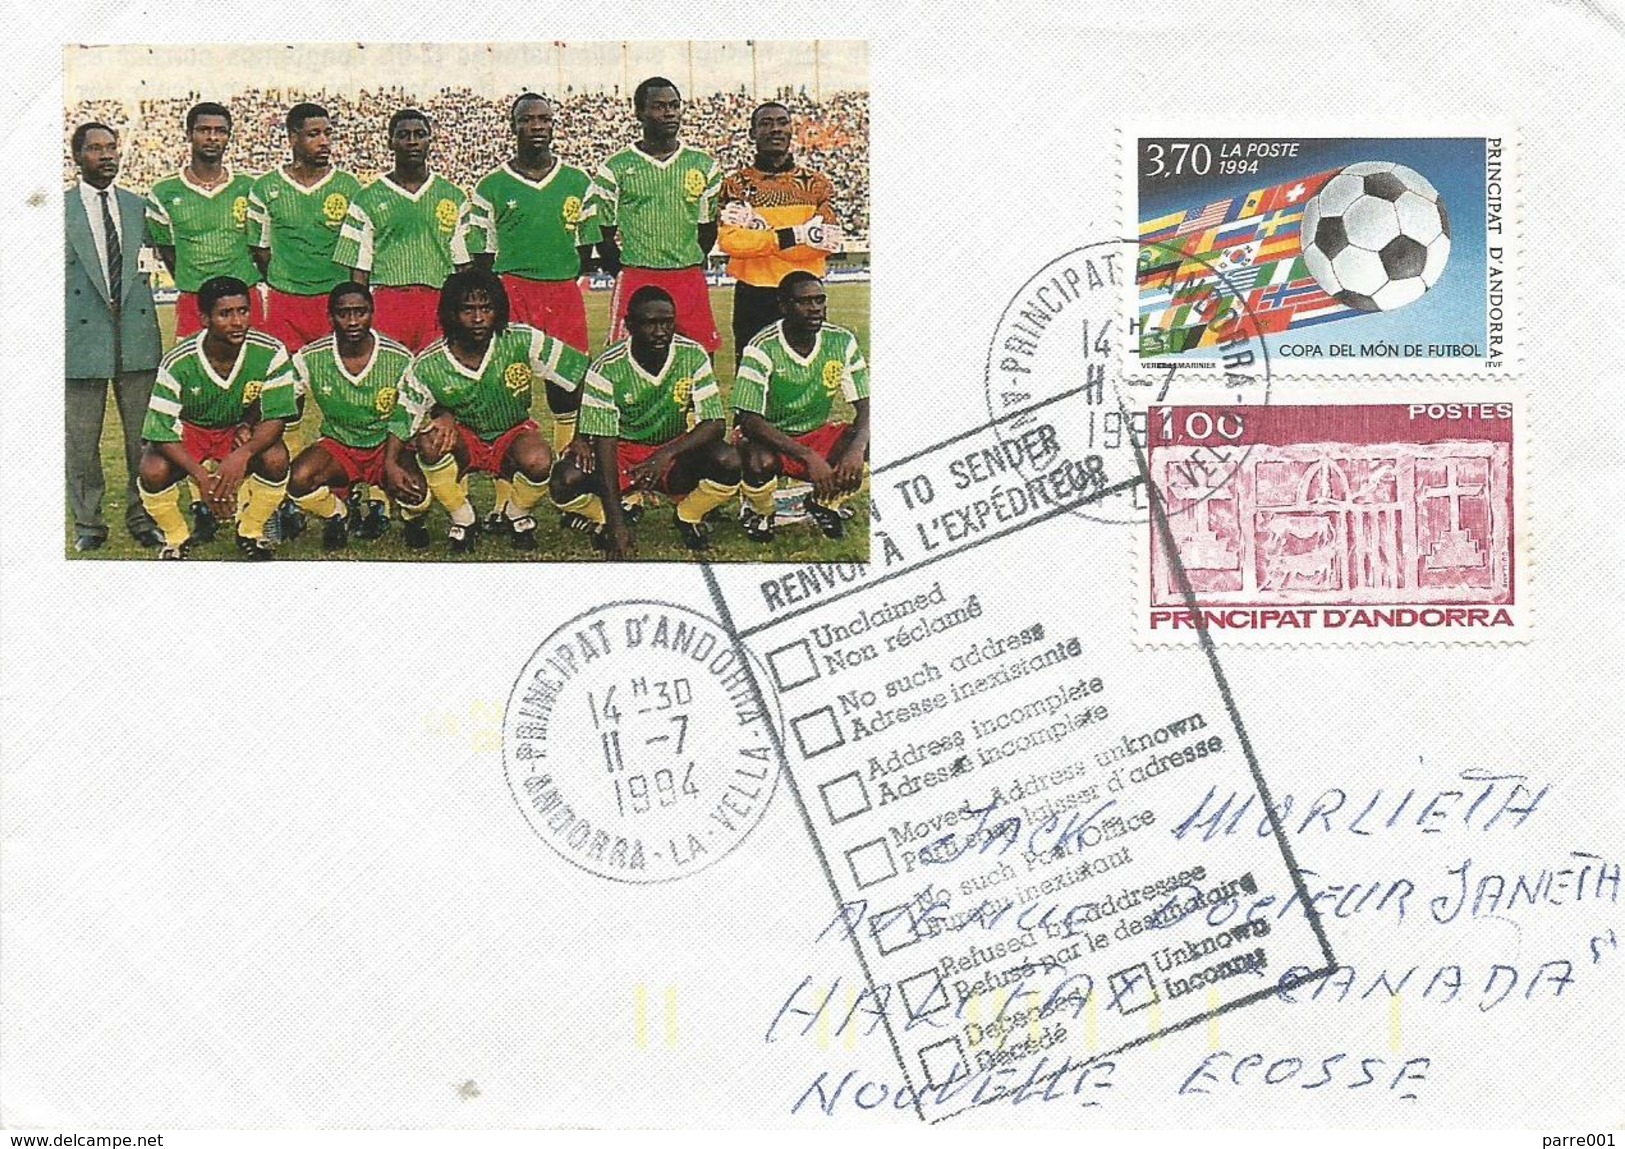 Andorra 1994 World Cup Football Soccer Returned Unclaimed Instructional Handstamp Cover Canada - 1994 – USA